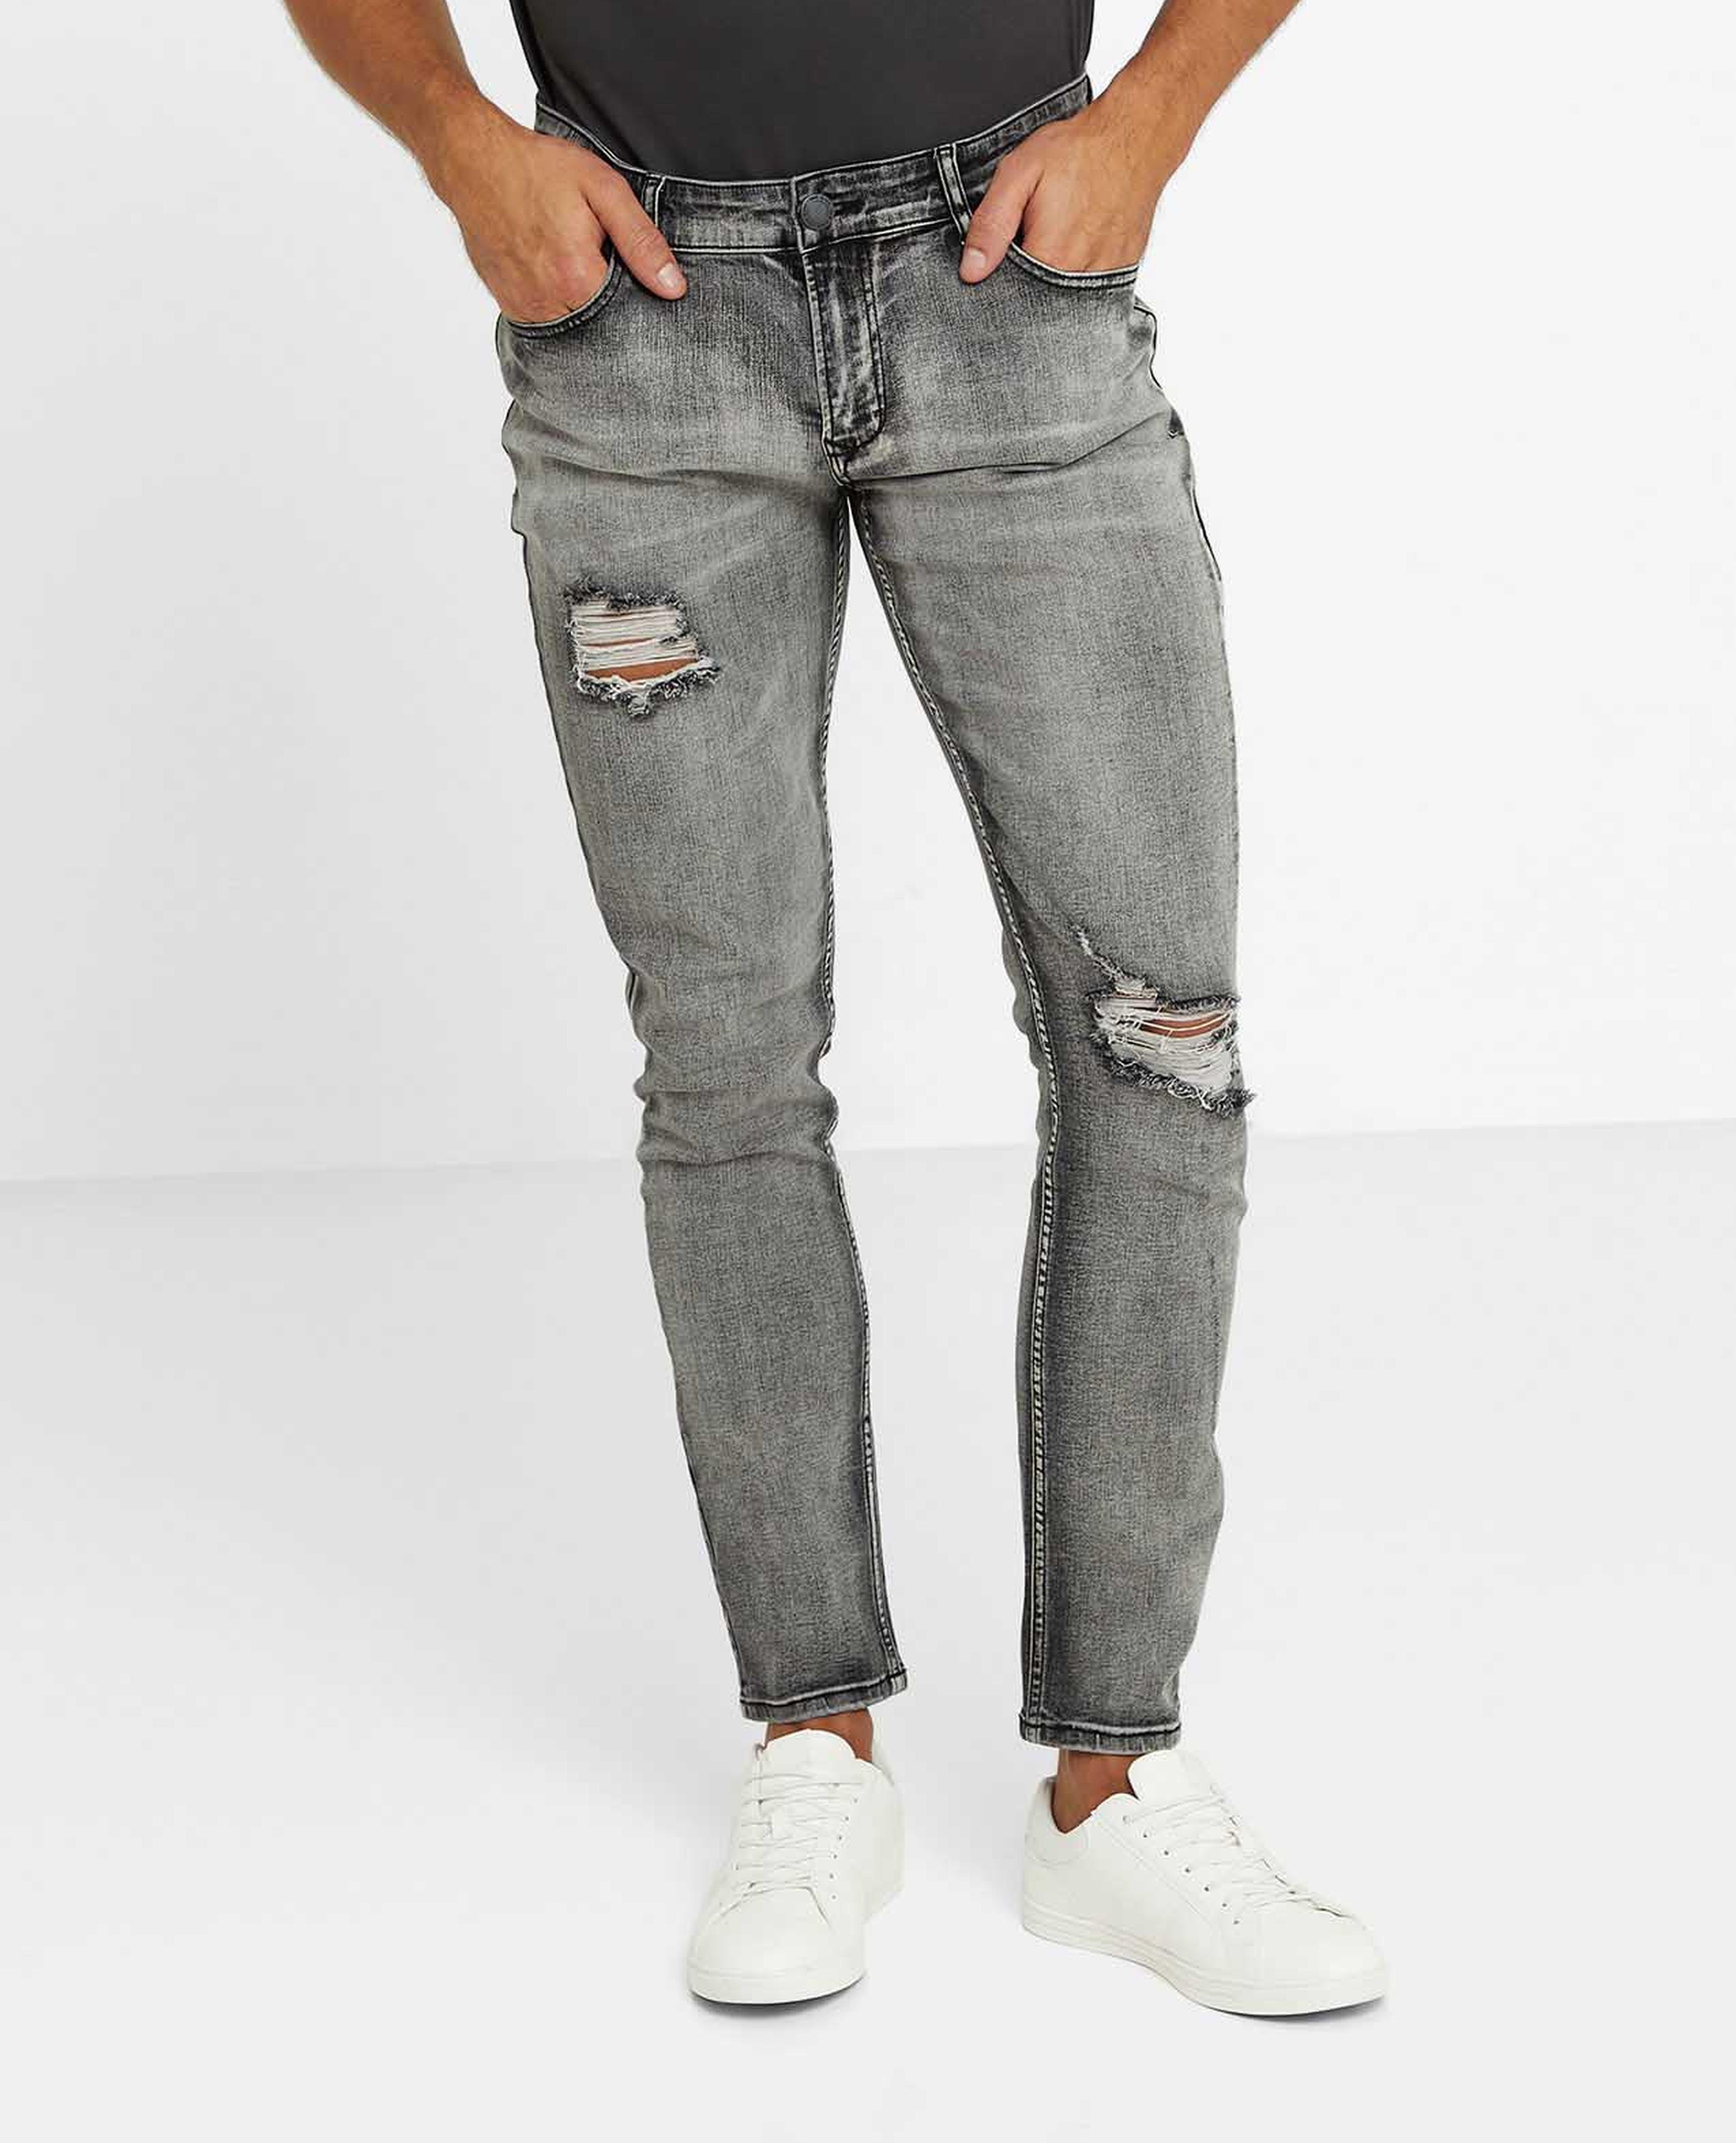 Grey Jeans Fashion For Men